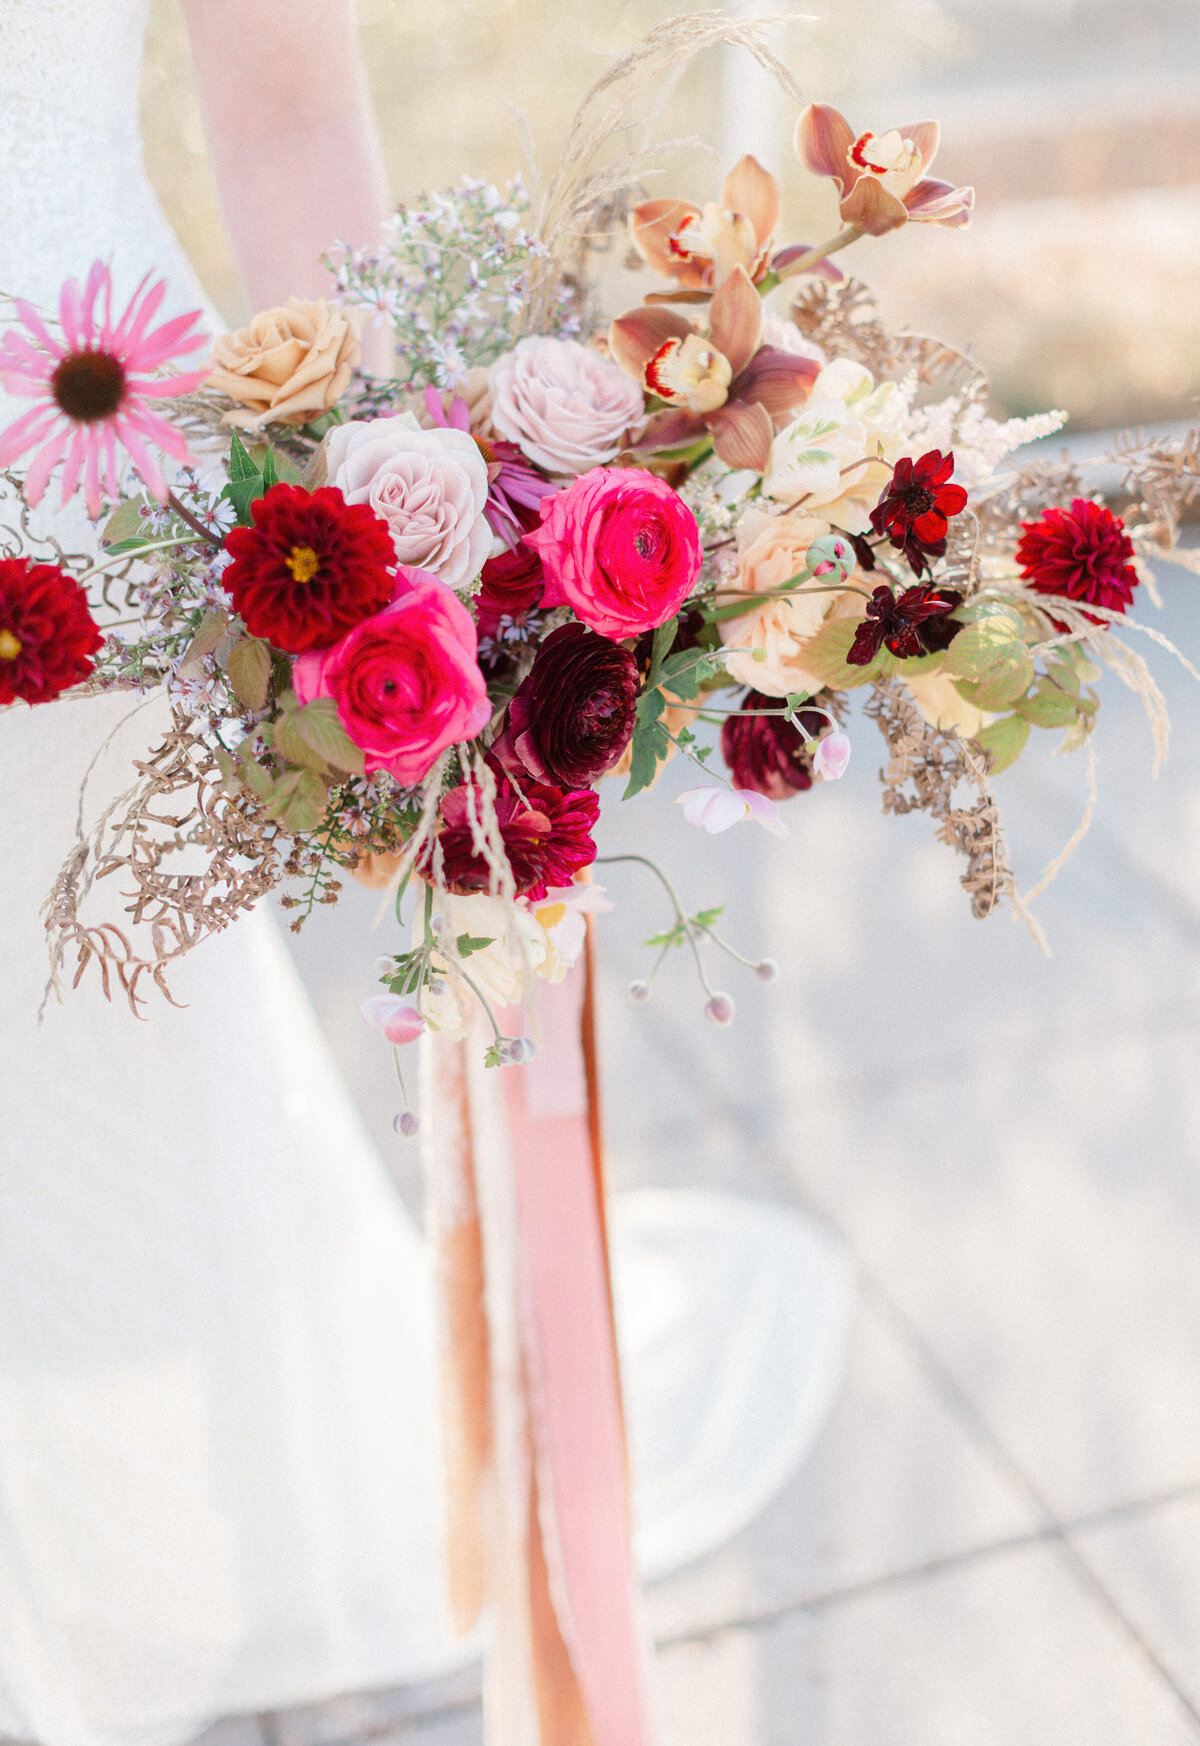 Atelier-Carmel-Wedding-Florist-GALLERY-Bridal-2 copy